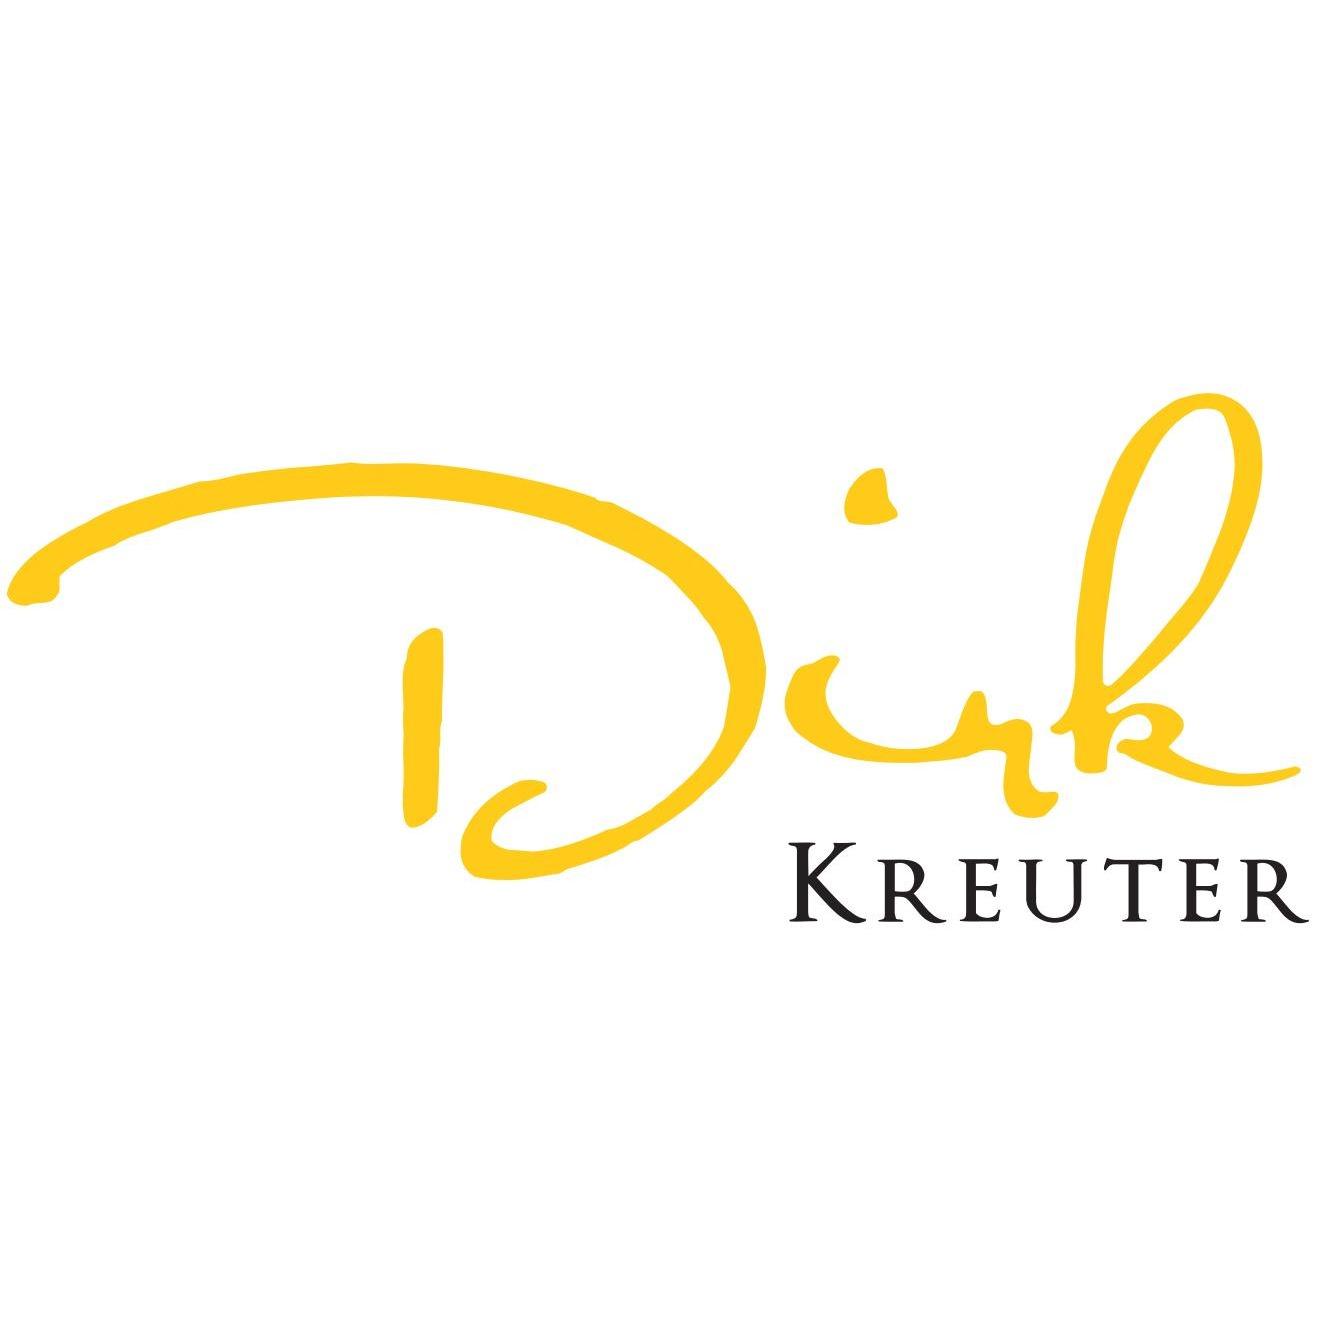 Dirk Kreuter in Bochum - Logo